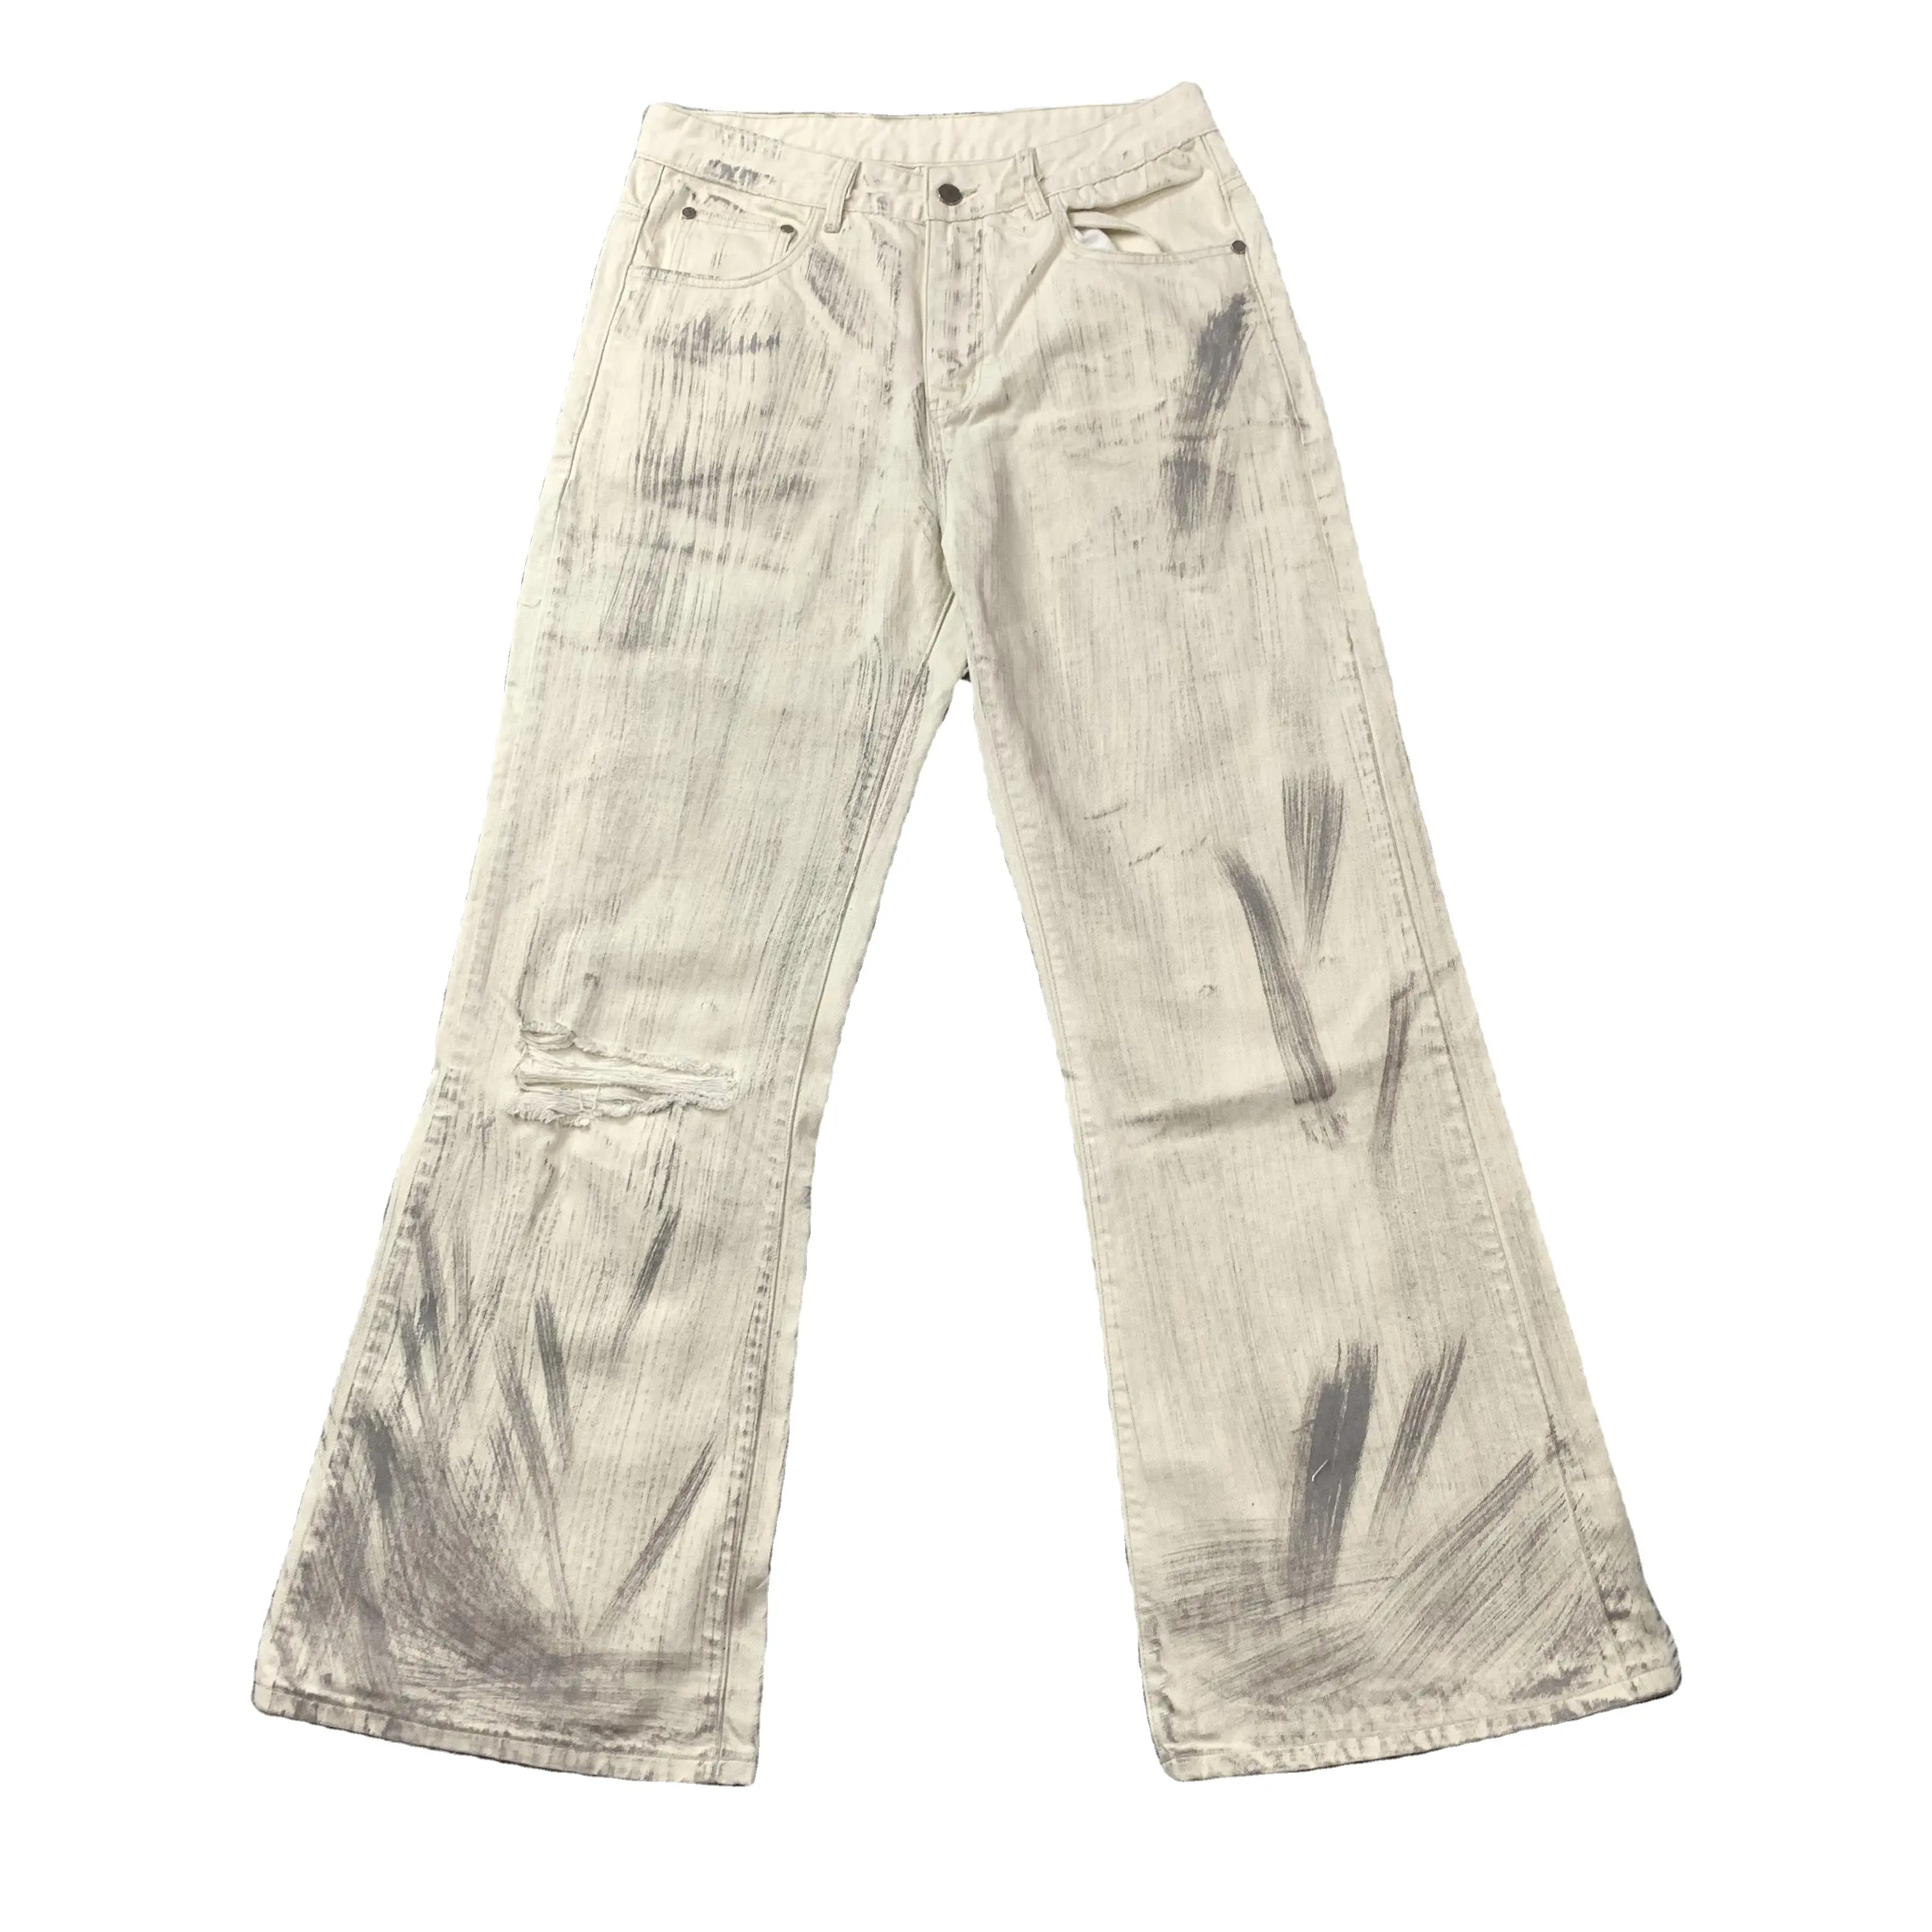 Denimguys Streetwear Heren Gescheurde Jeansbroek Op Maat Vuile Verf Plus Size Hiphop Heren Losse Graffiti Verontrustende Denim Jeans